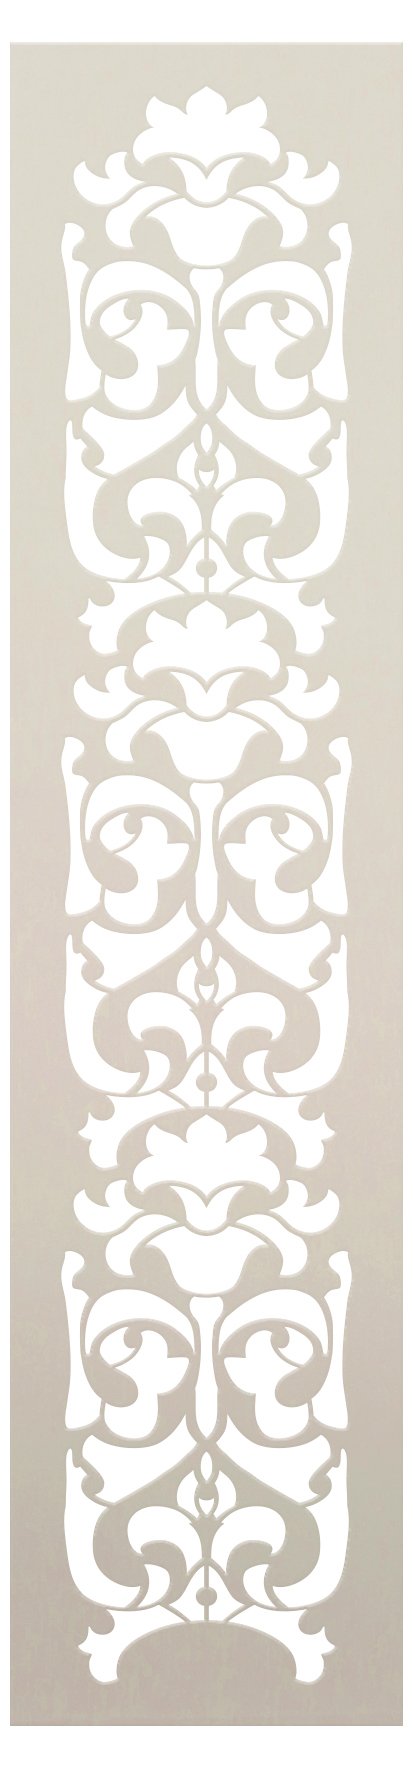 Medieval Flower Flourish Band Stencil by StudioR12 | Craft DIY Pattern Backsplash Home Decor | Paint Wood Sign | Reusable Mylar Template | Select Size | STCL5823